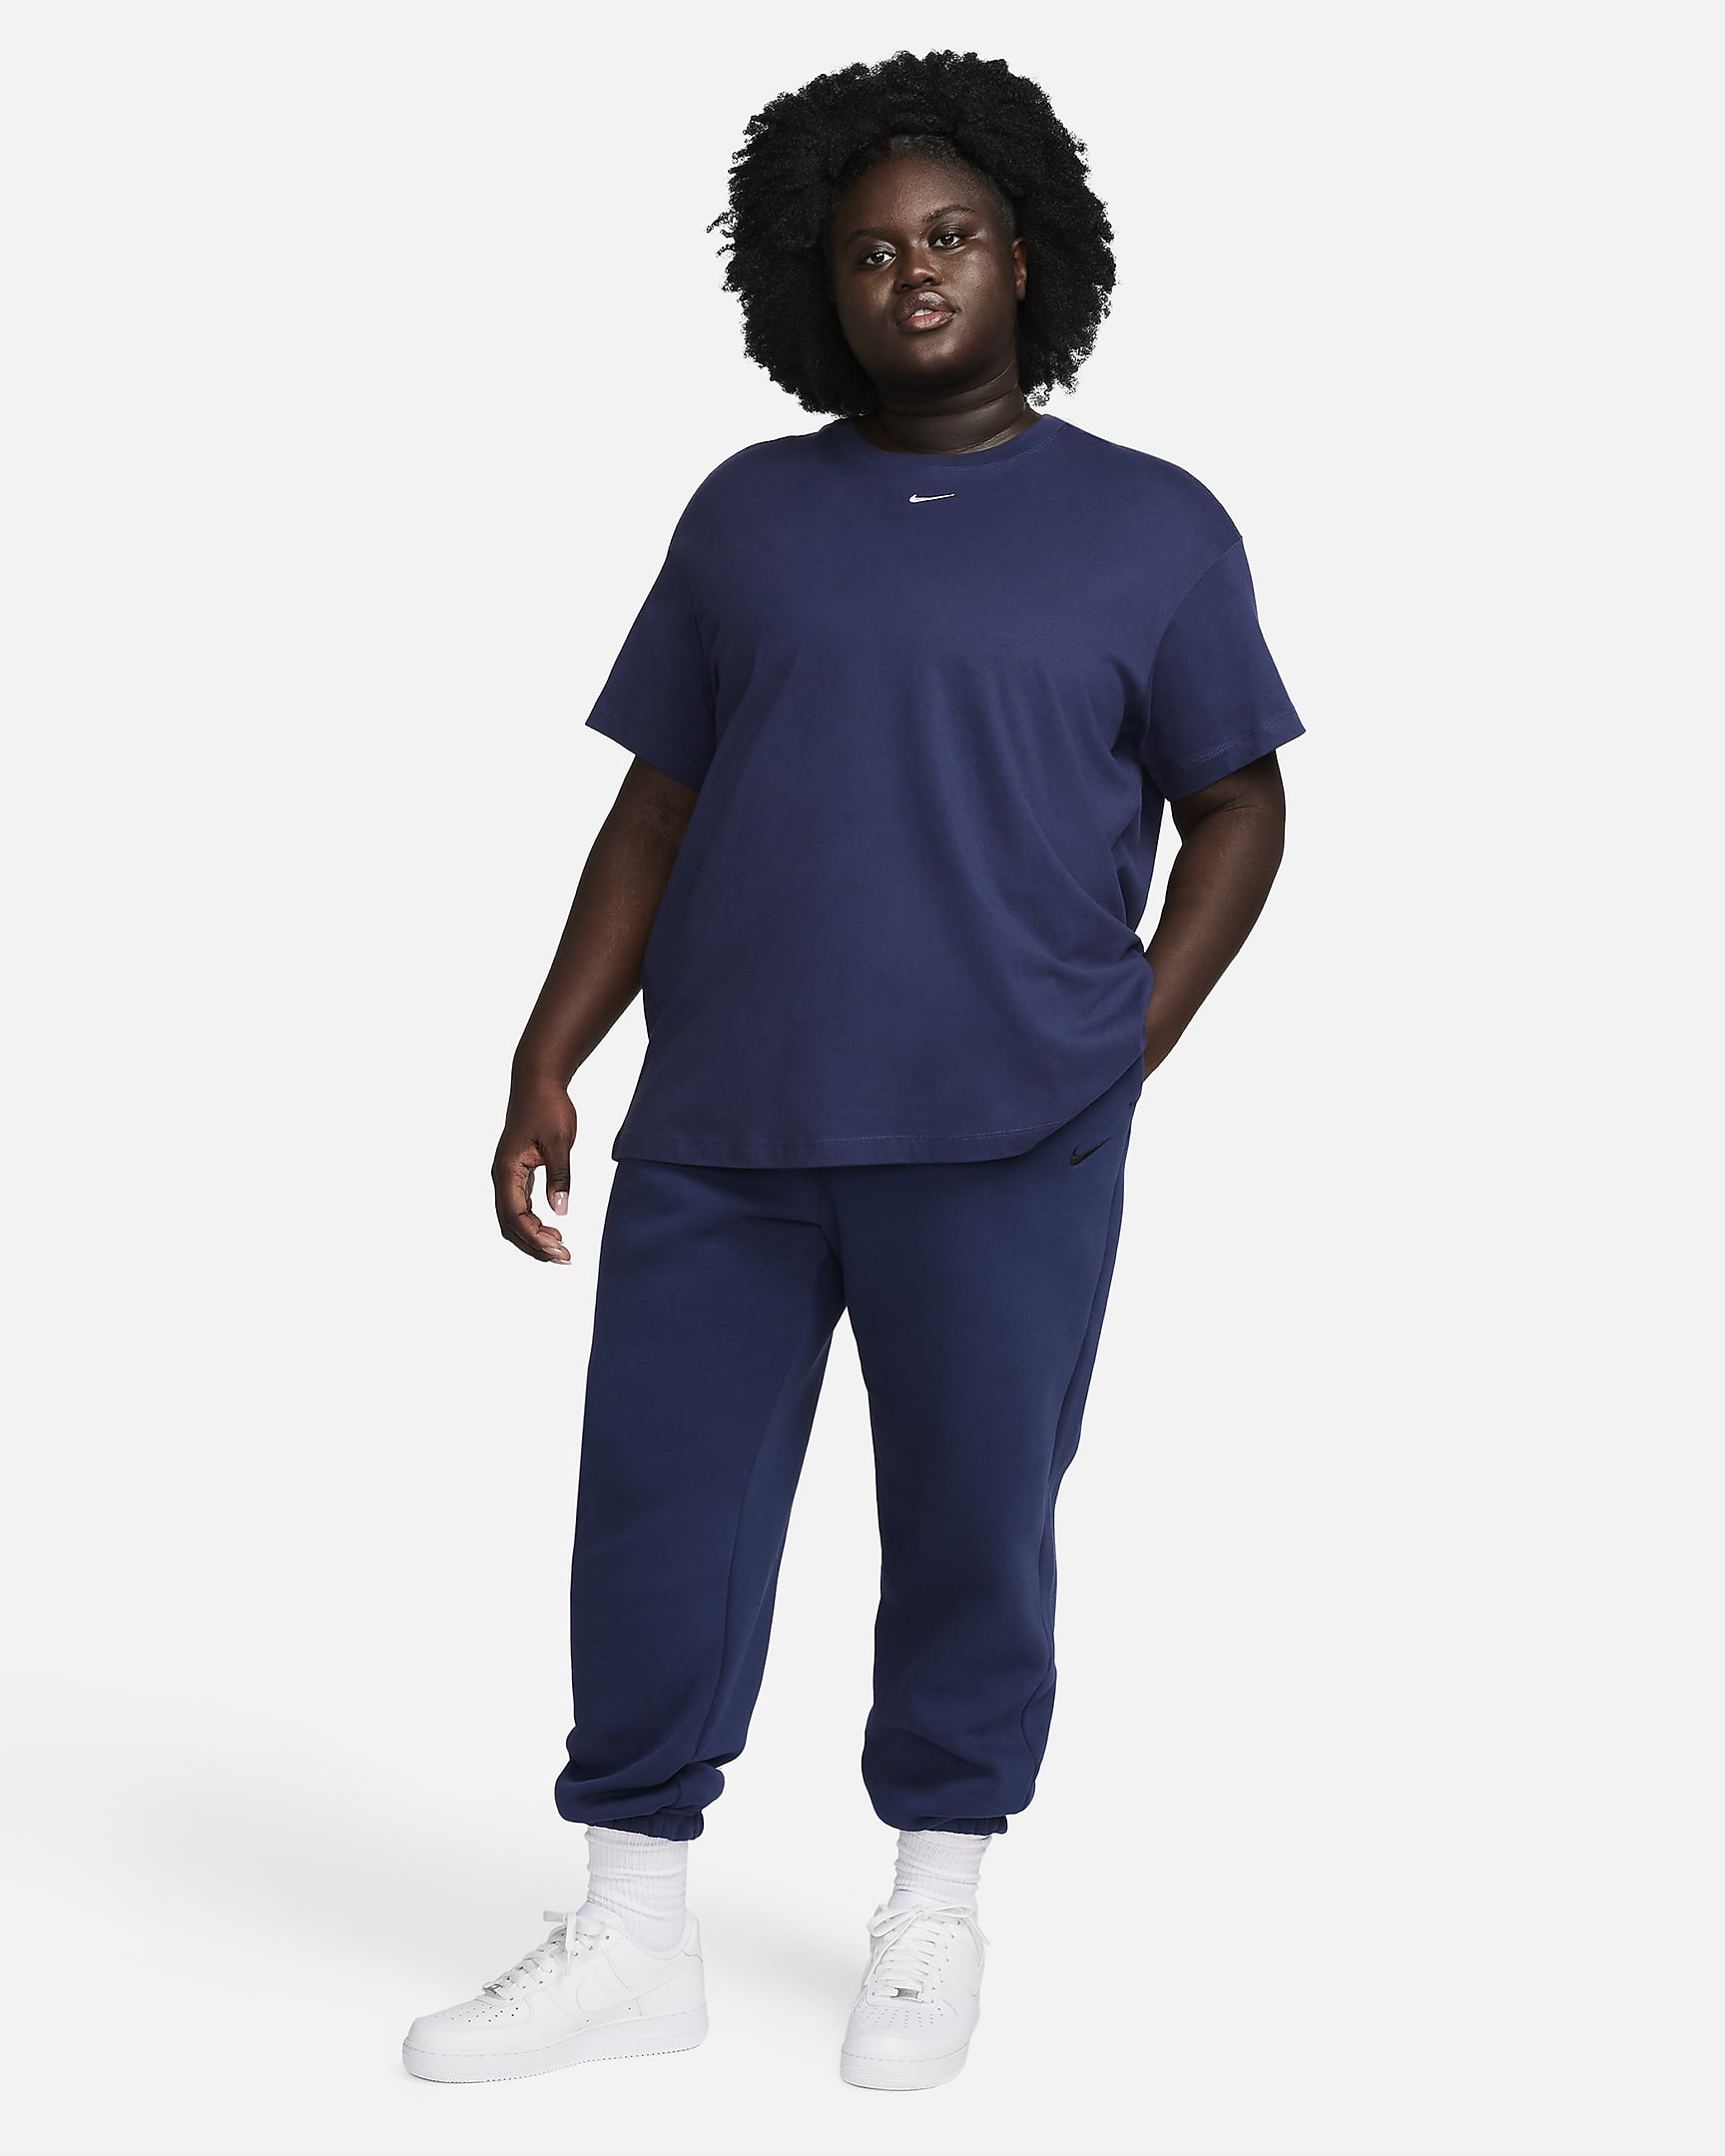 Nike Sportswear Essential Women's T-Shirt (Plus Size). Nike.com